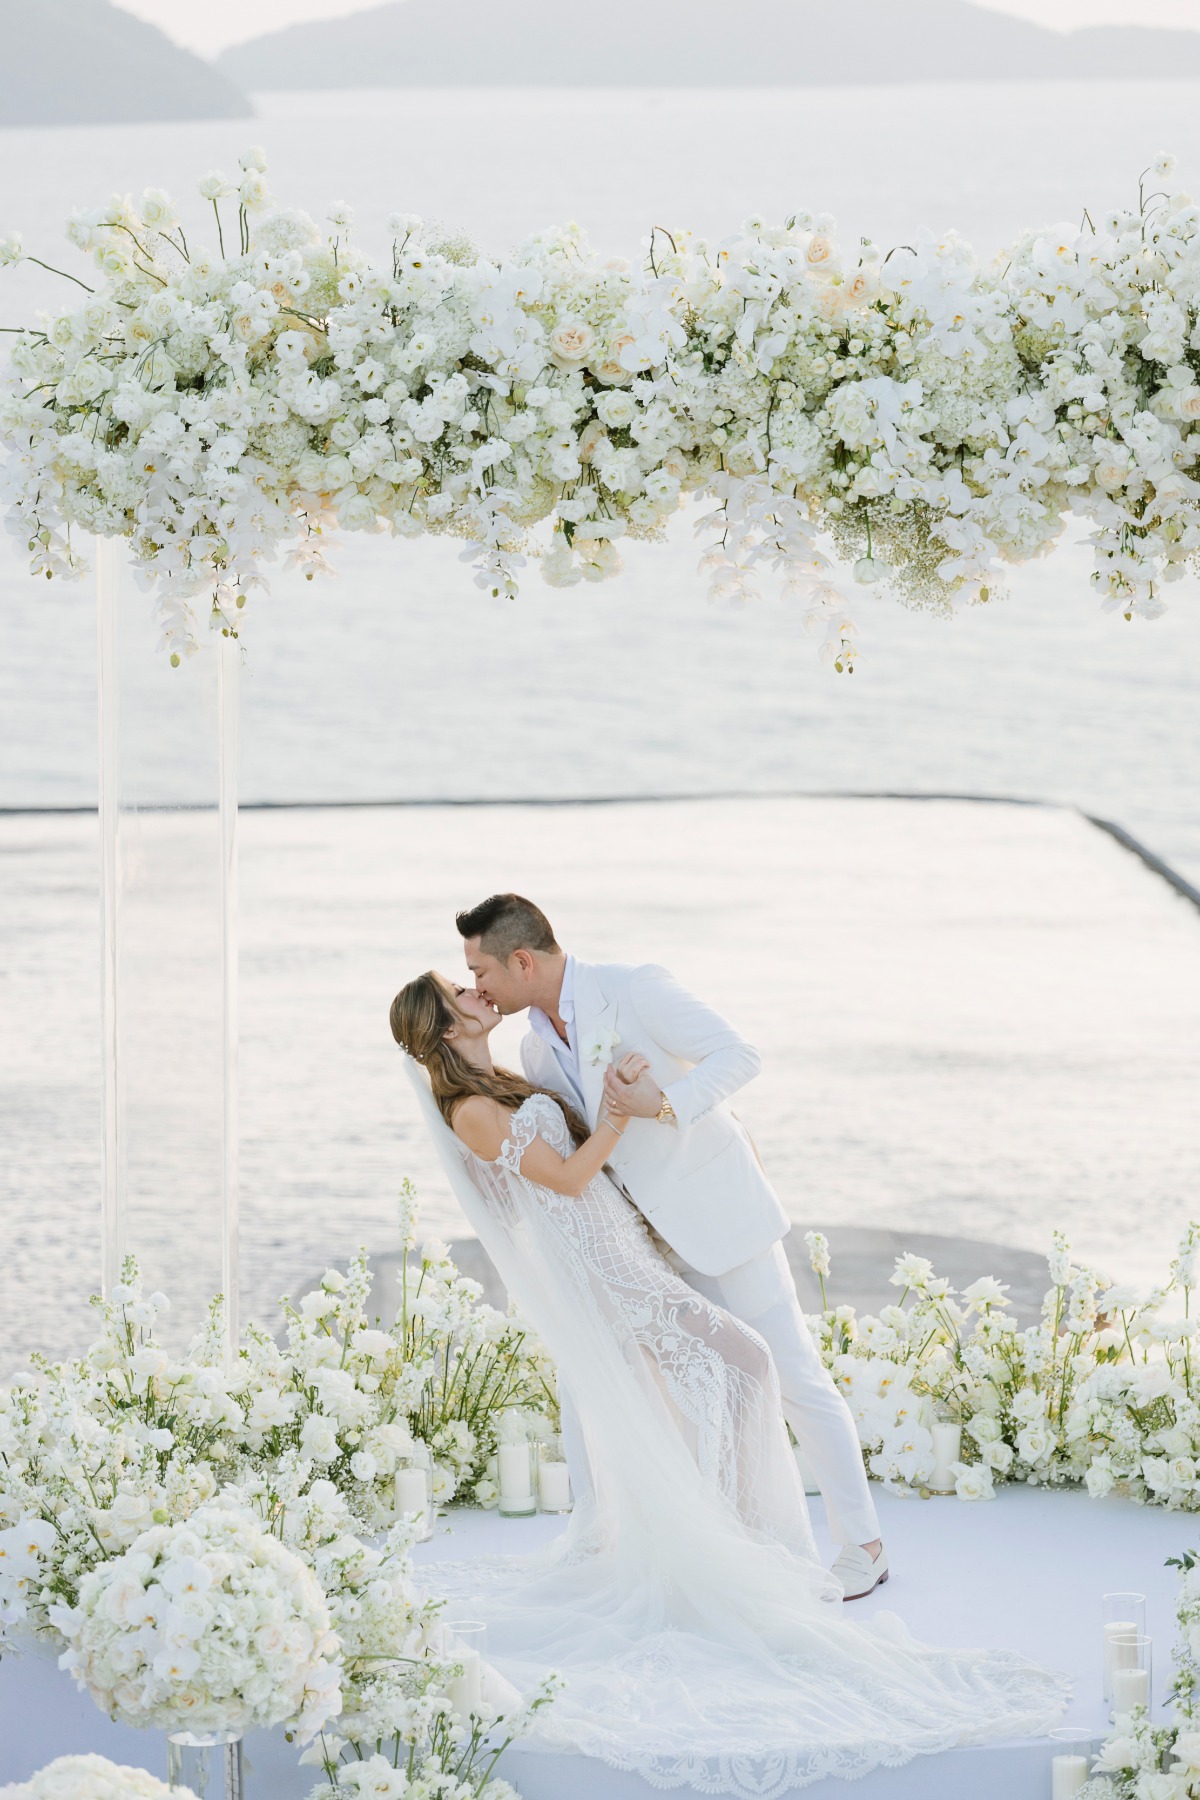 Luxurious floral backdrop Thai wedding ceremony